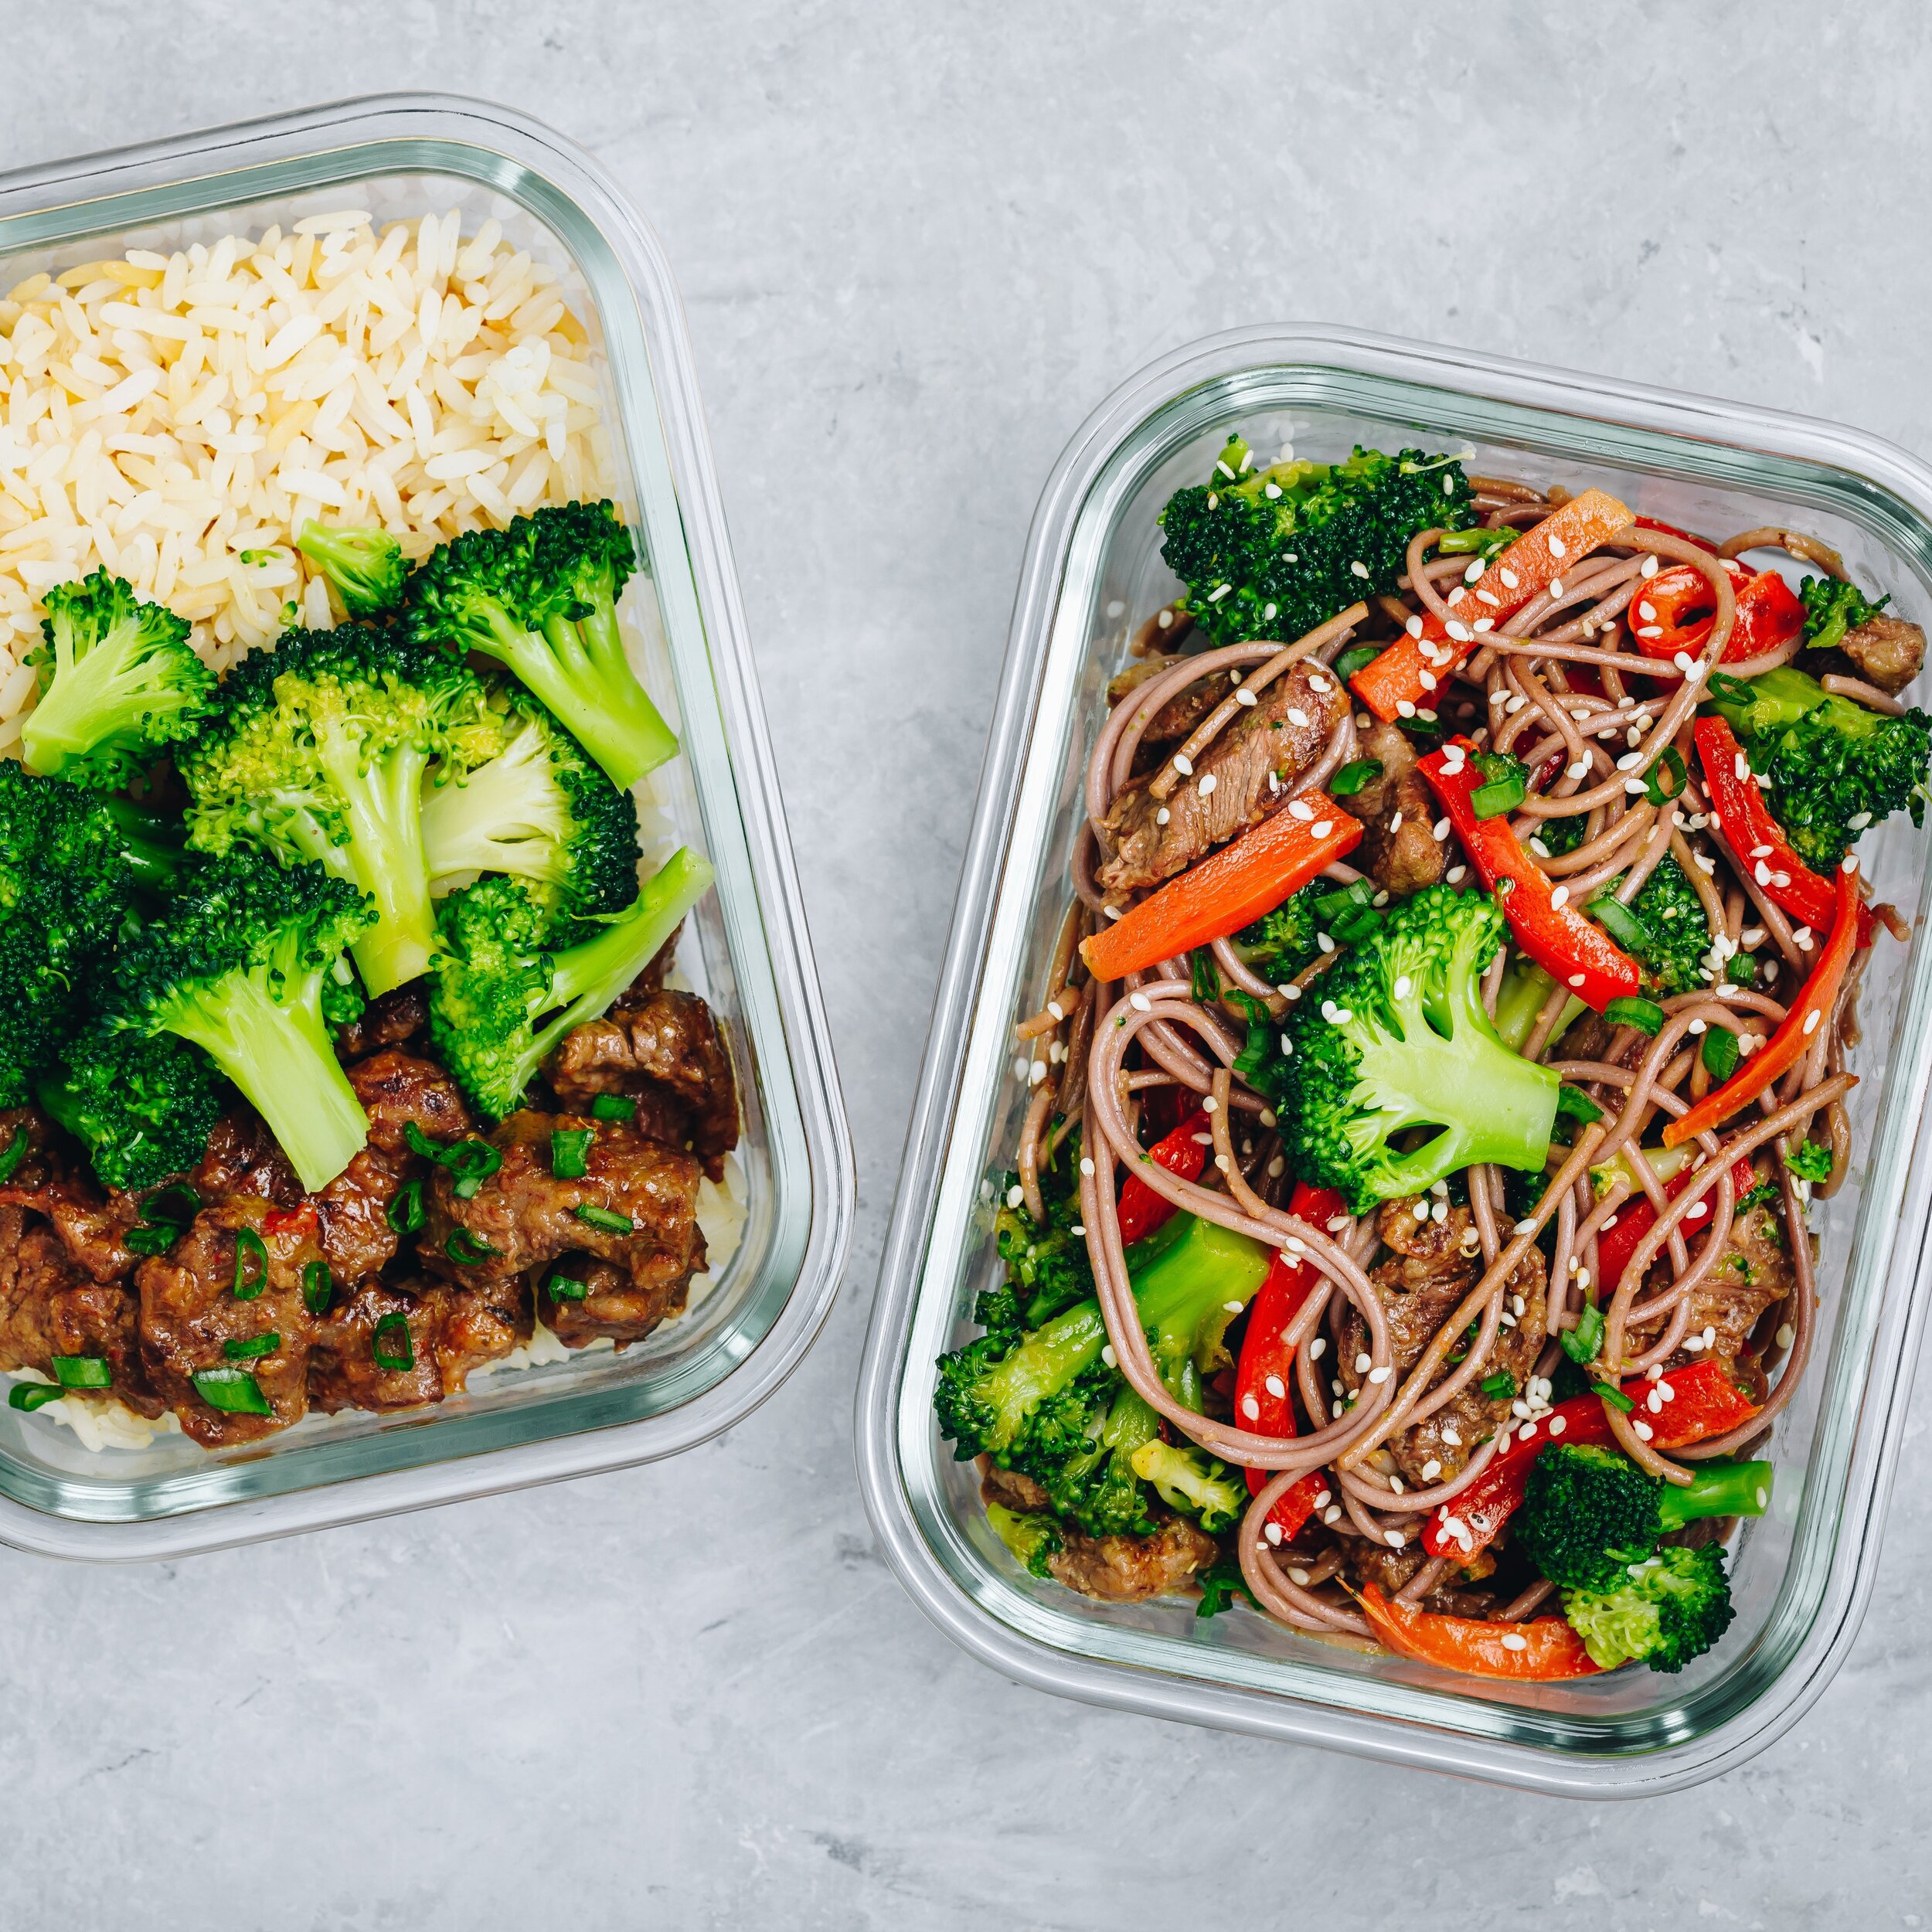 beef-and-broccoli-stir-fry-meal-prep-lunch-box-con-HZULP5Y-edit.jpg